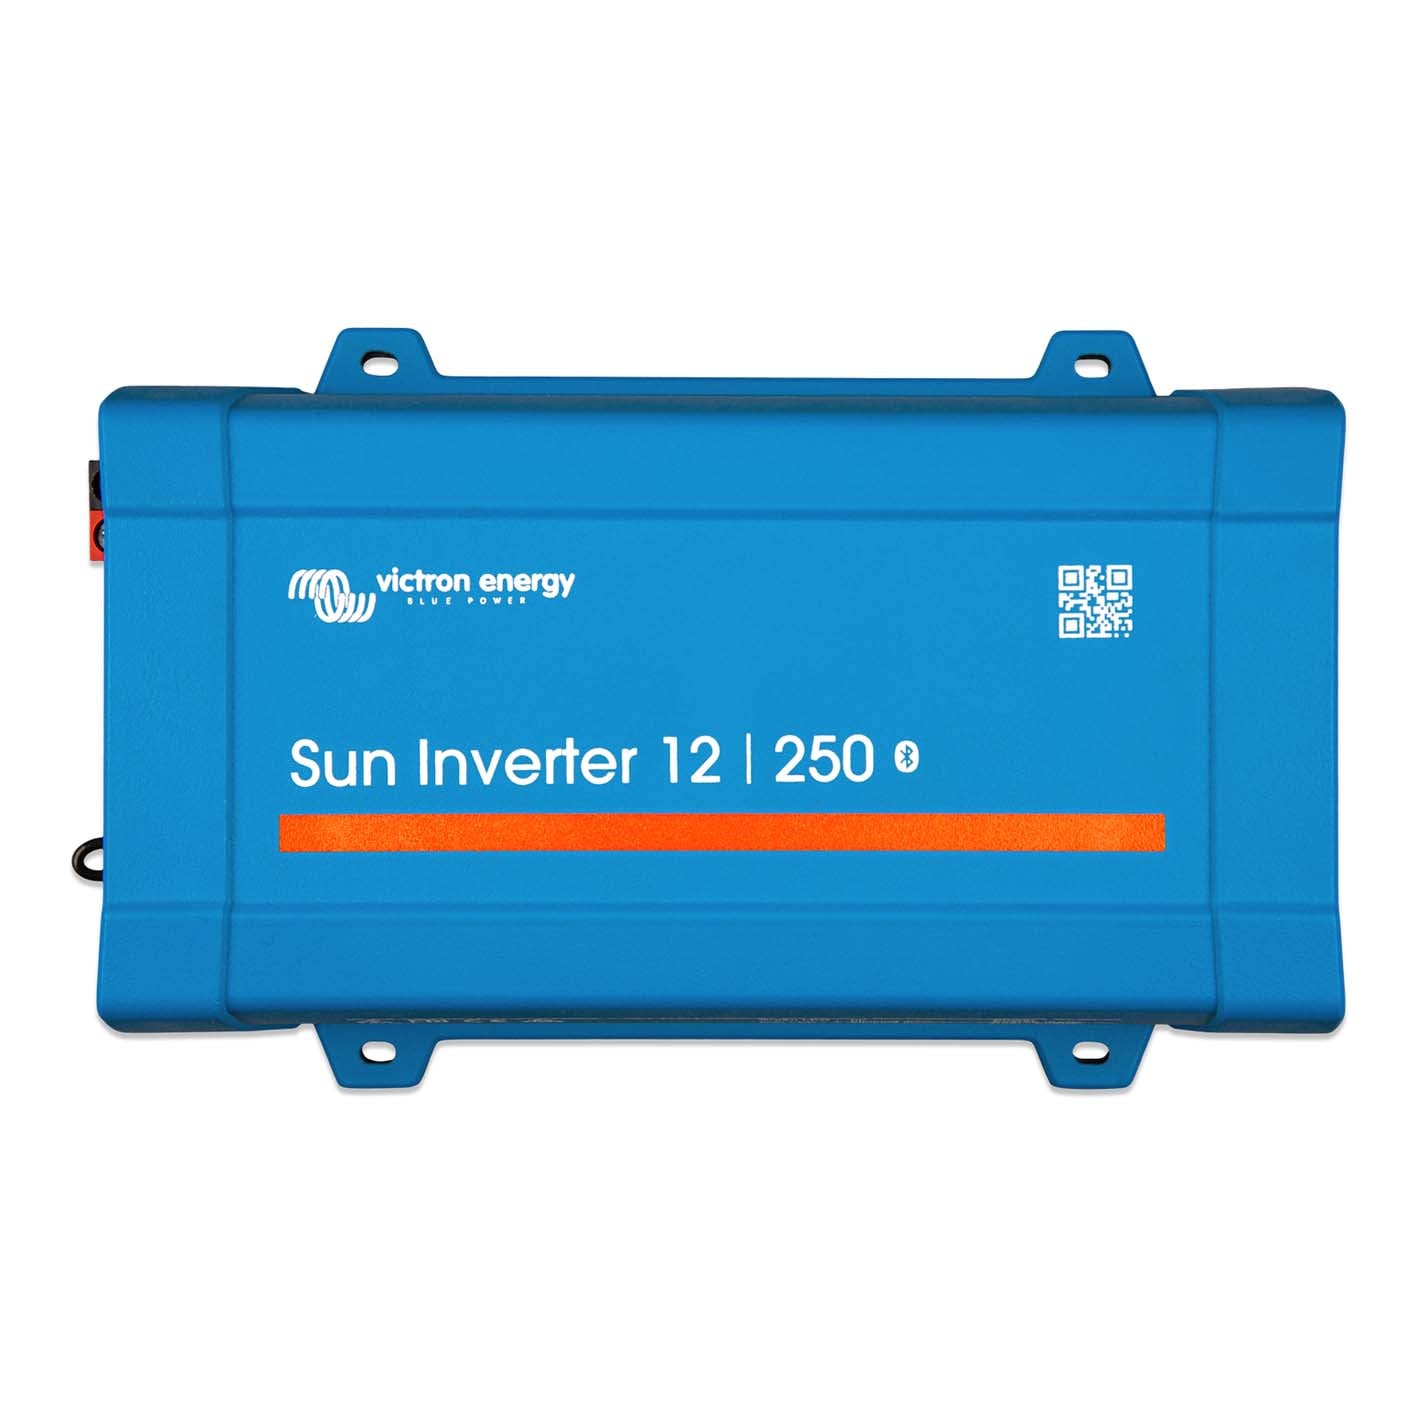 Sun Inverter (with inbuilt solar controller)